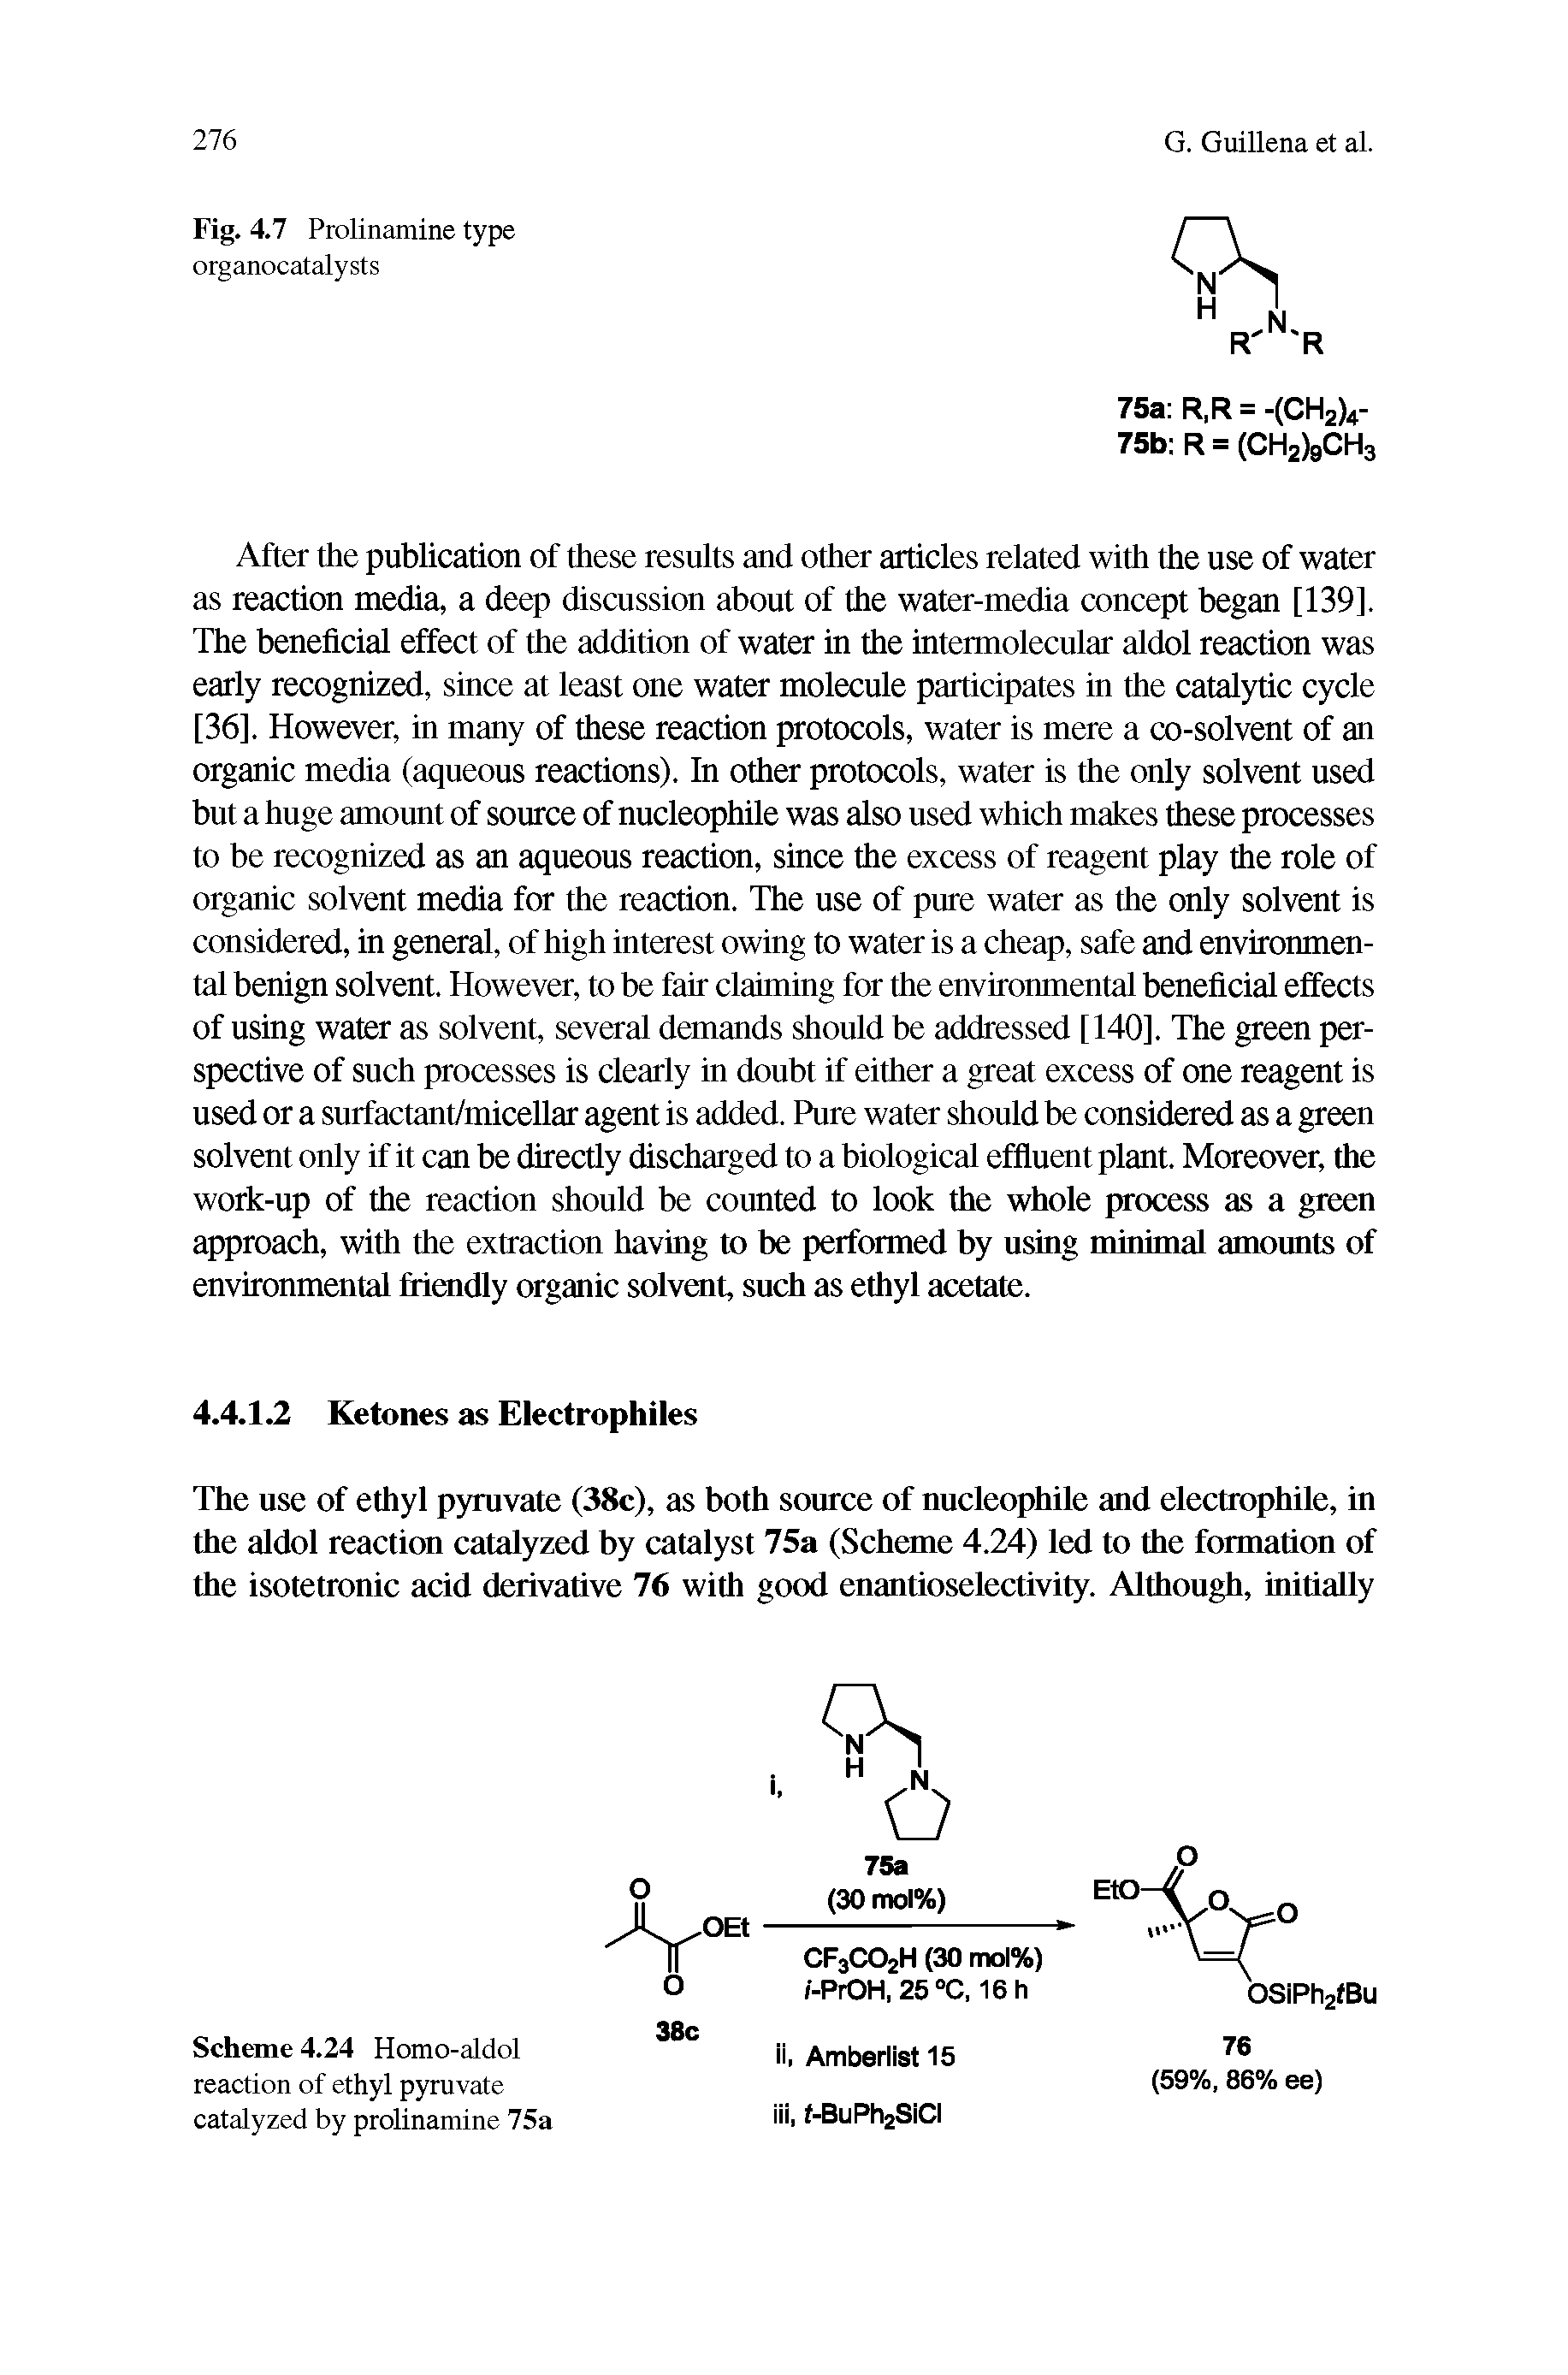 Scheme 4.24 Homo-aldol reaction of ethyl pyruvate catalyzed by prolinamine 75a...